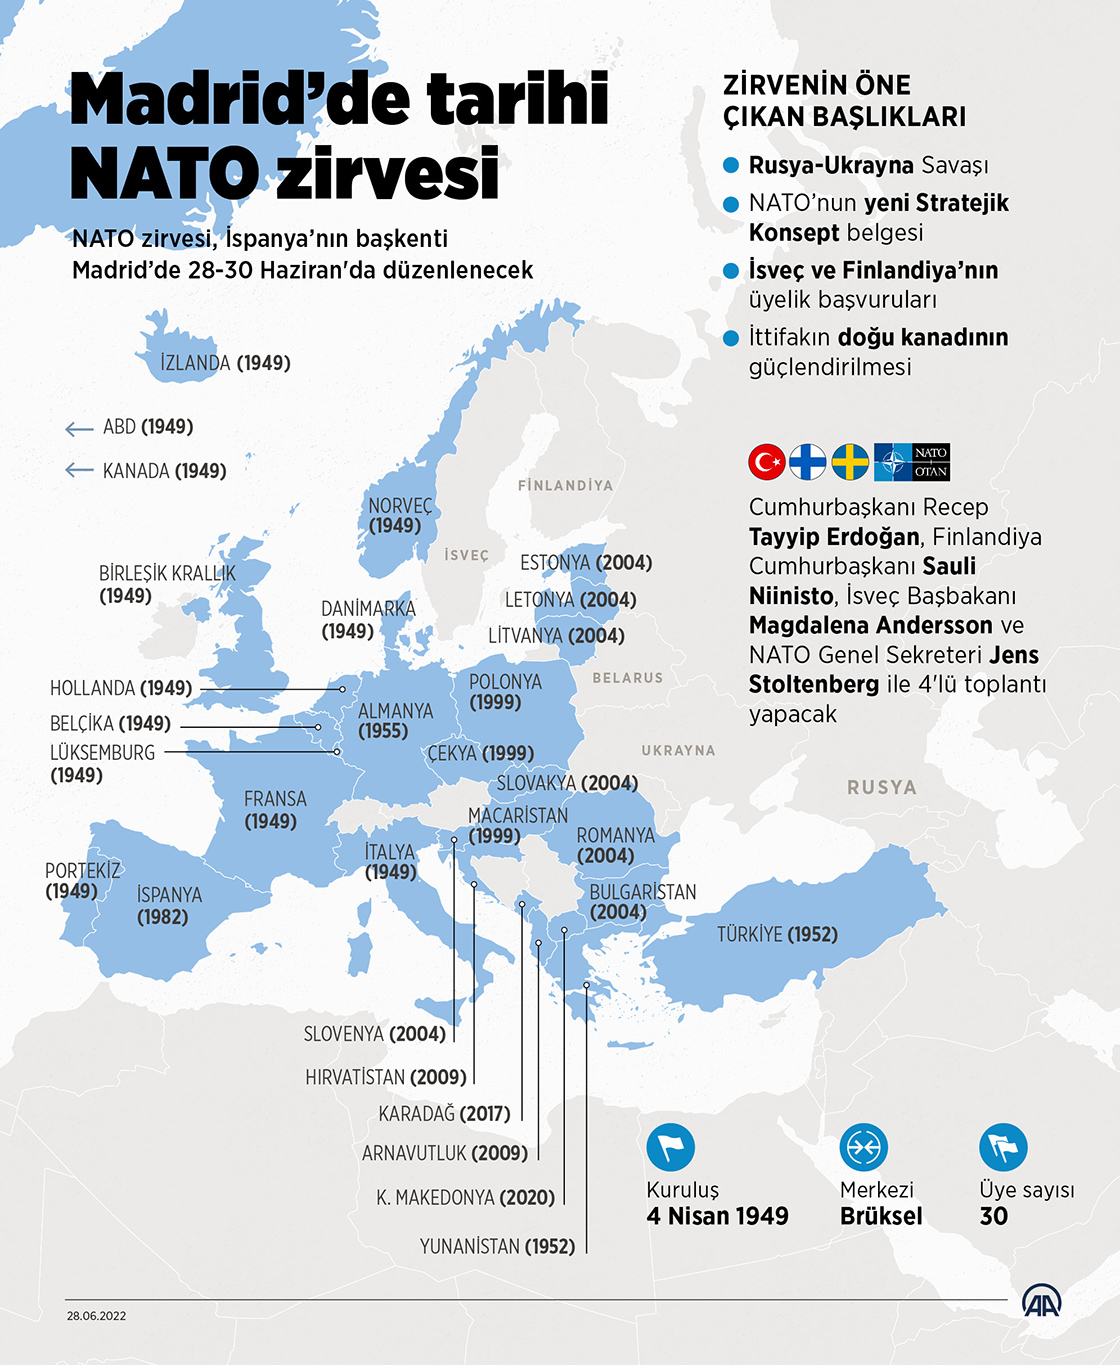 Madrid’de tarihi NATO zirvesi